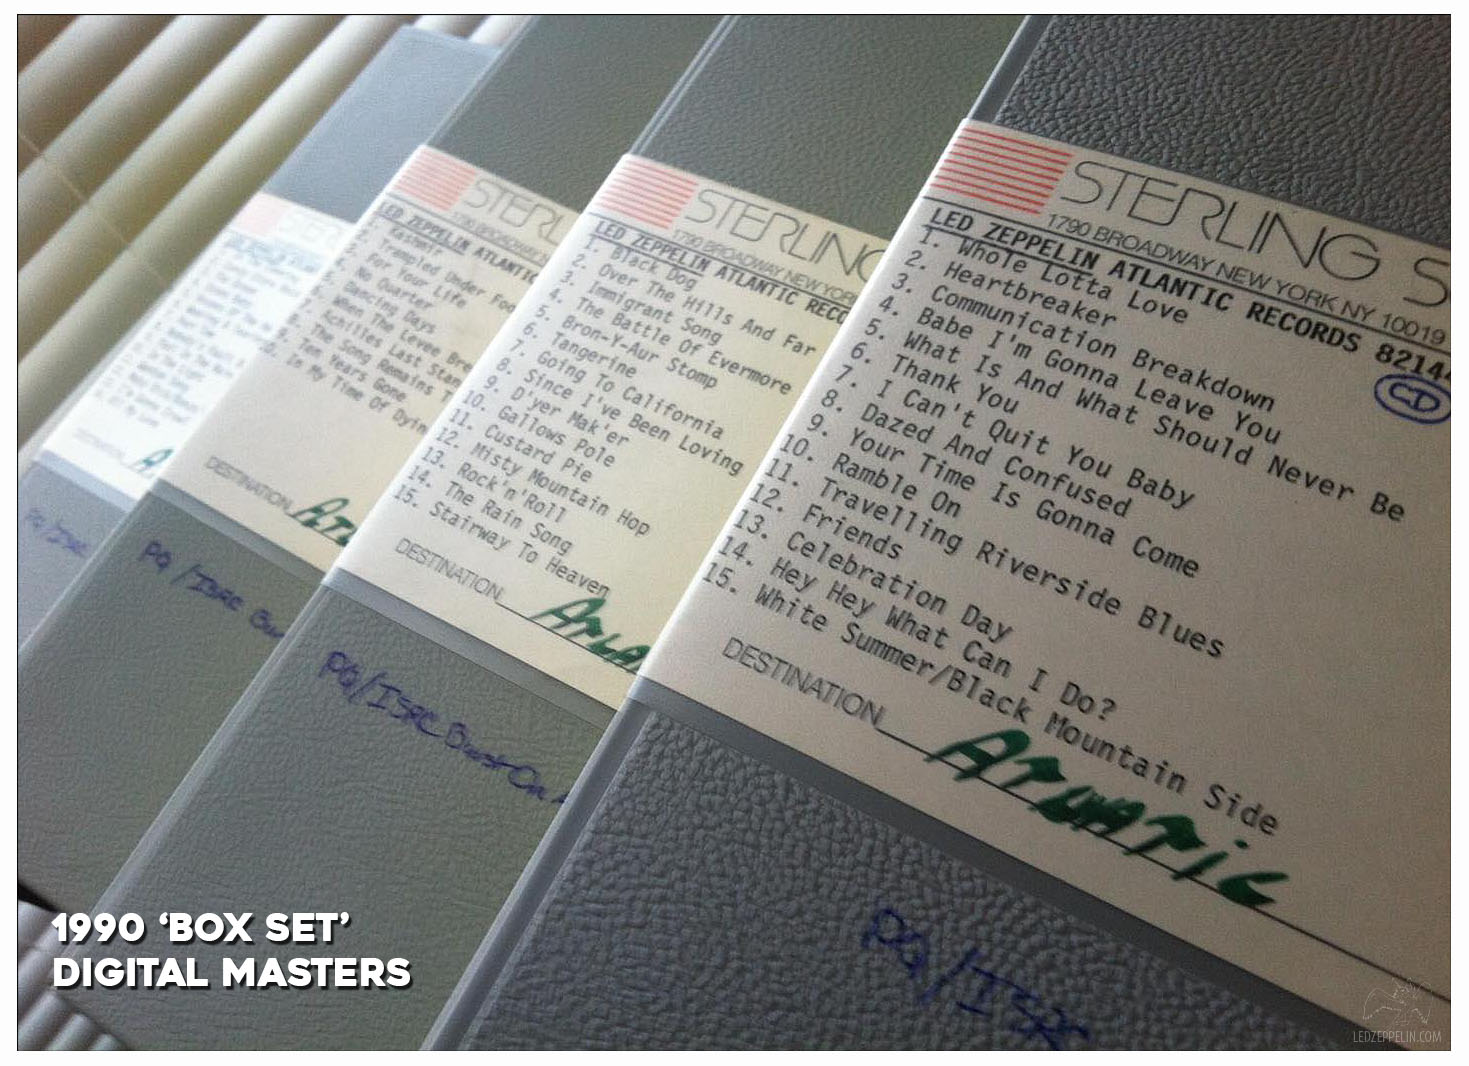 1990 'Box Set' Digial Masters